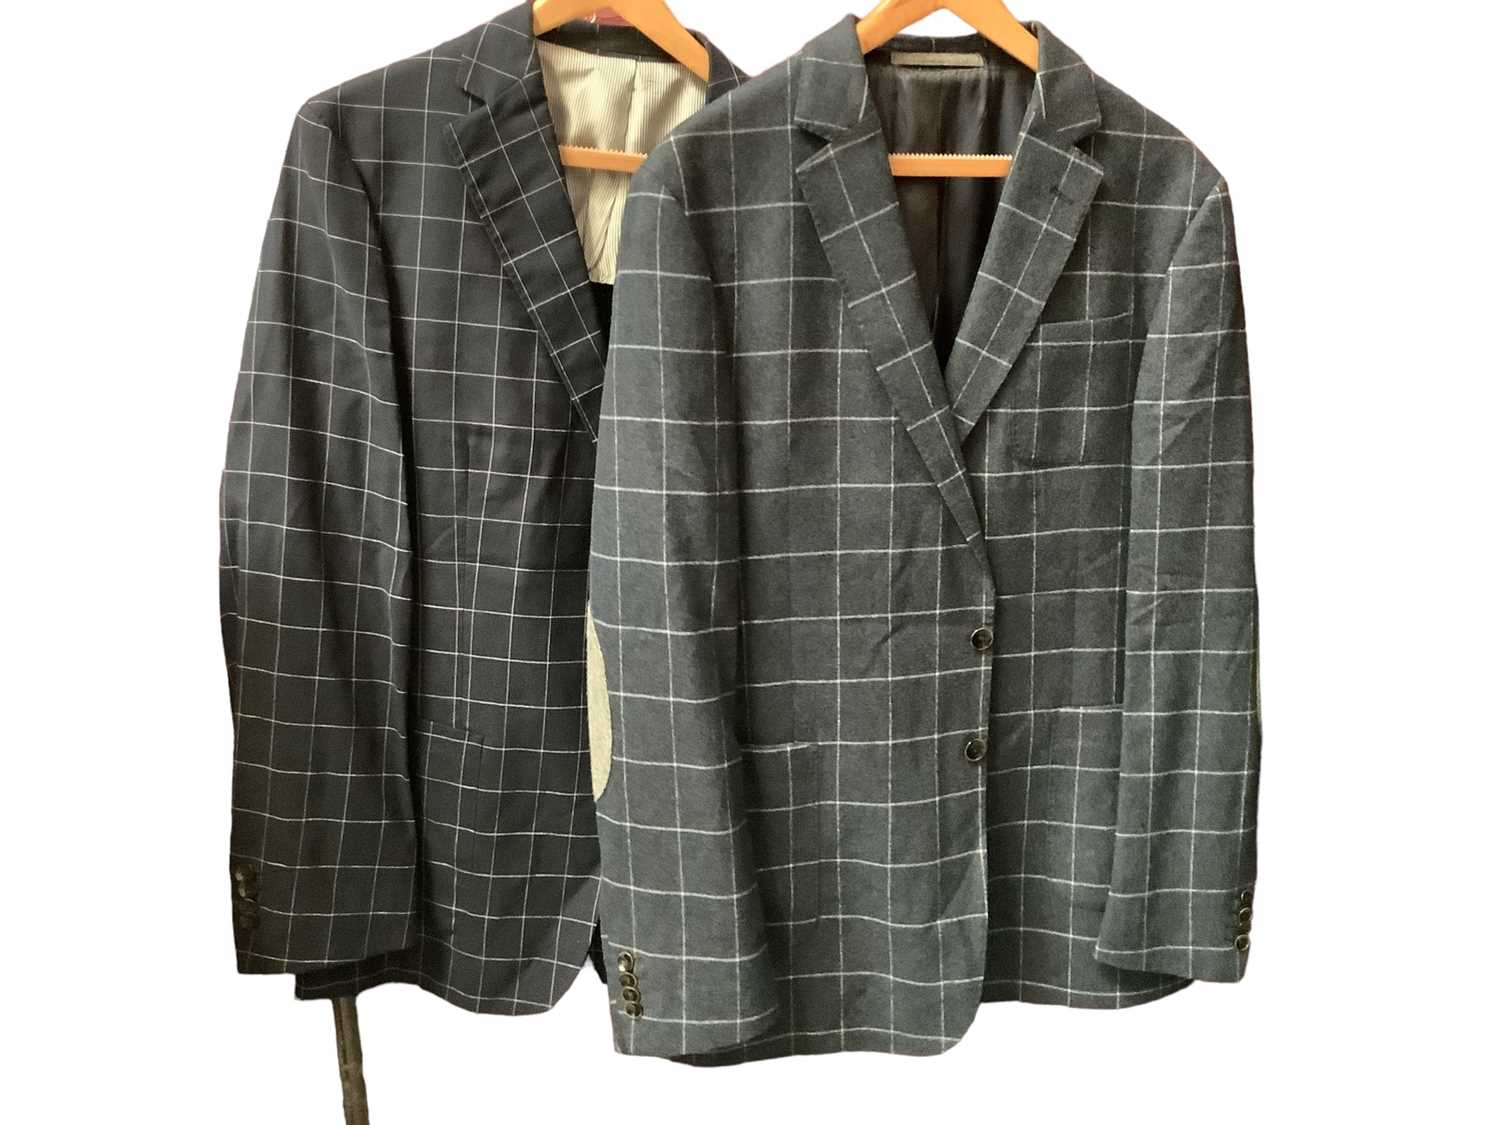 Ermenegildo Zegna navy pin-strip wool jacket with linen and silk lining, navy pin-strip jacket by No